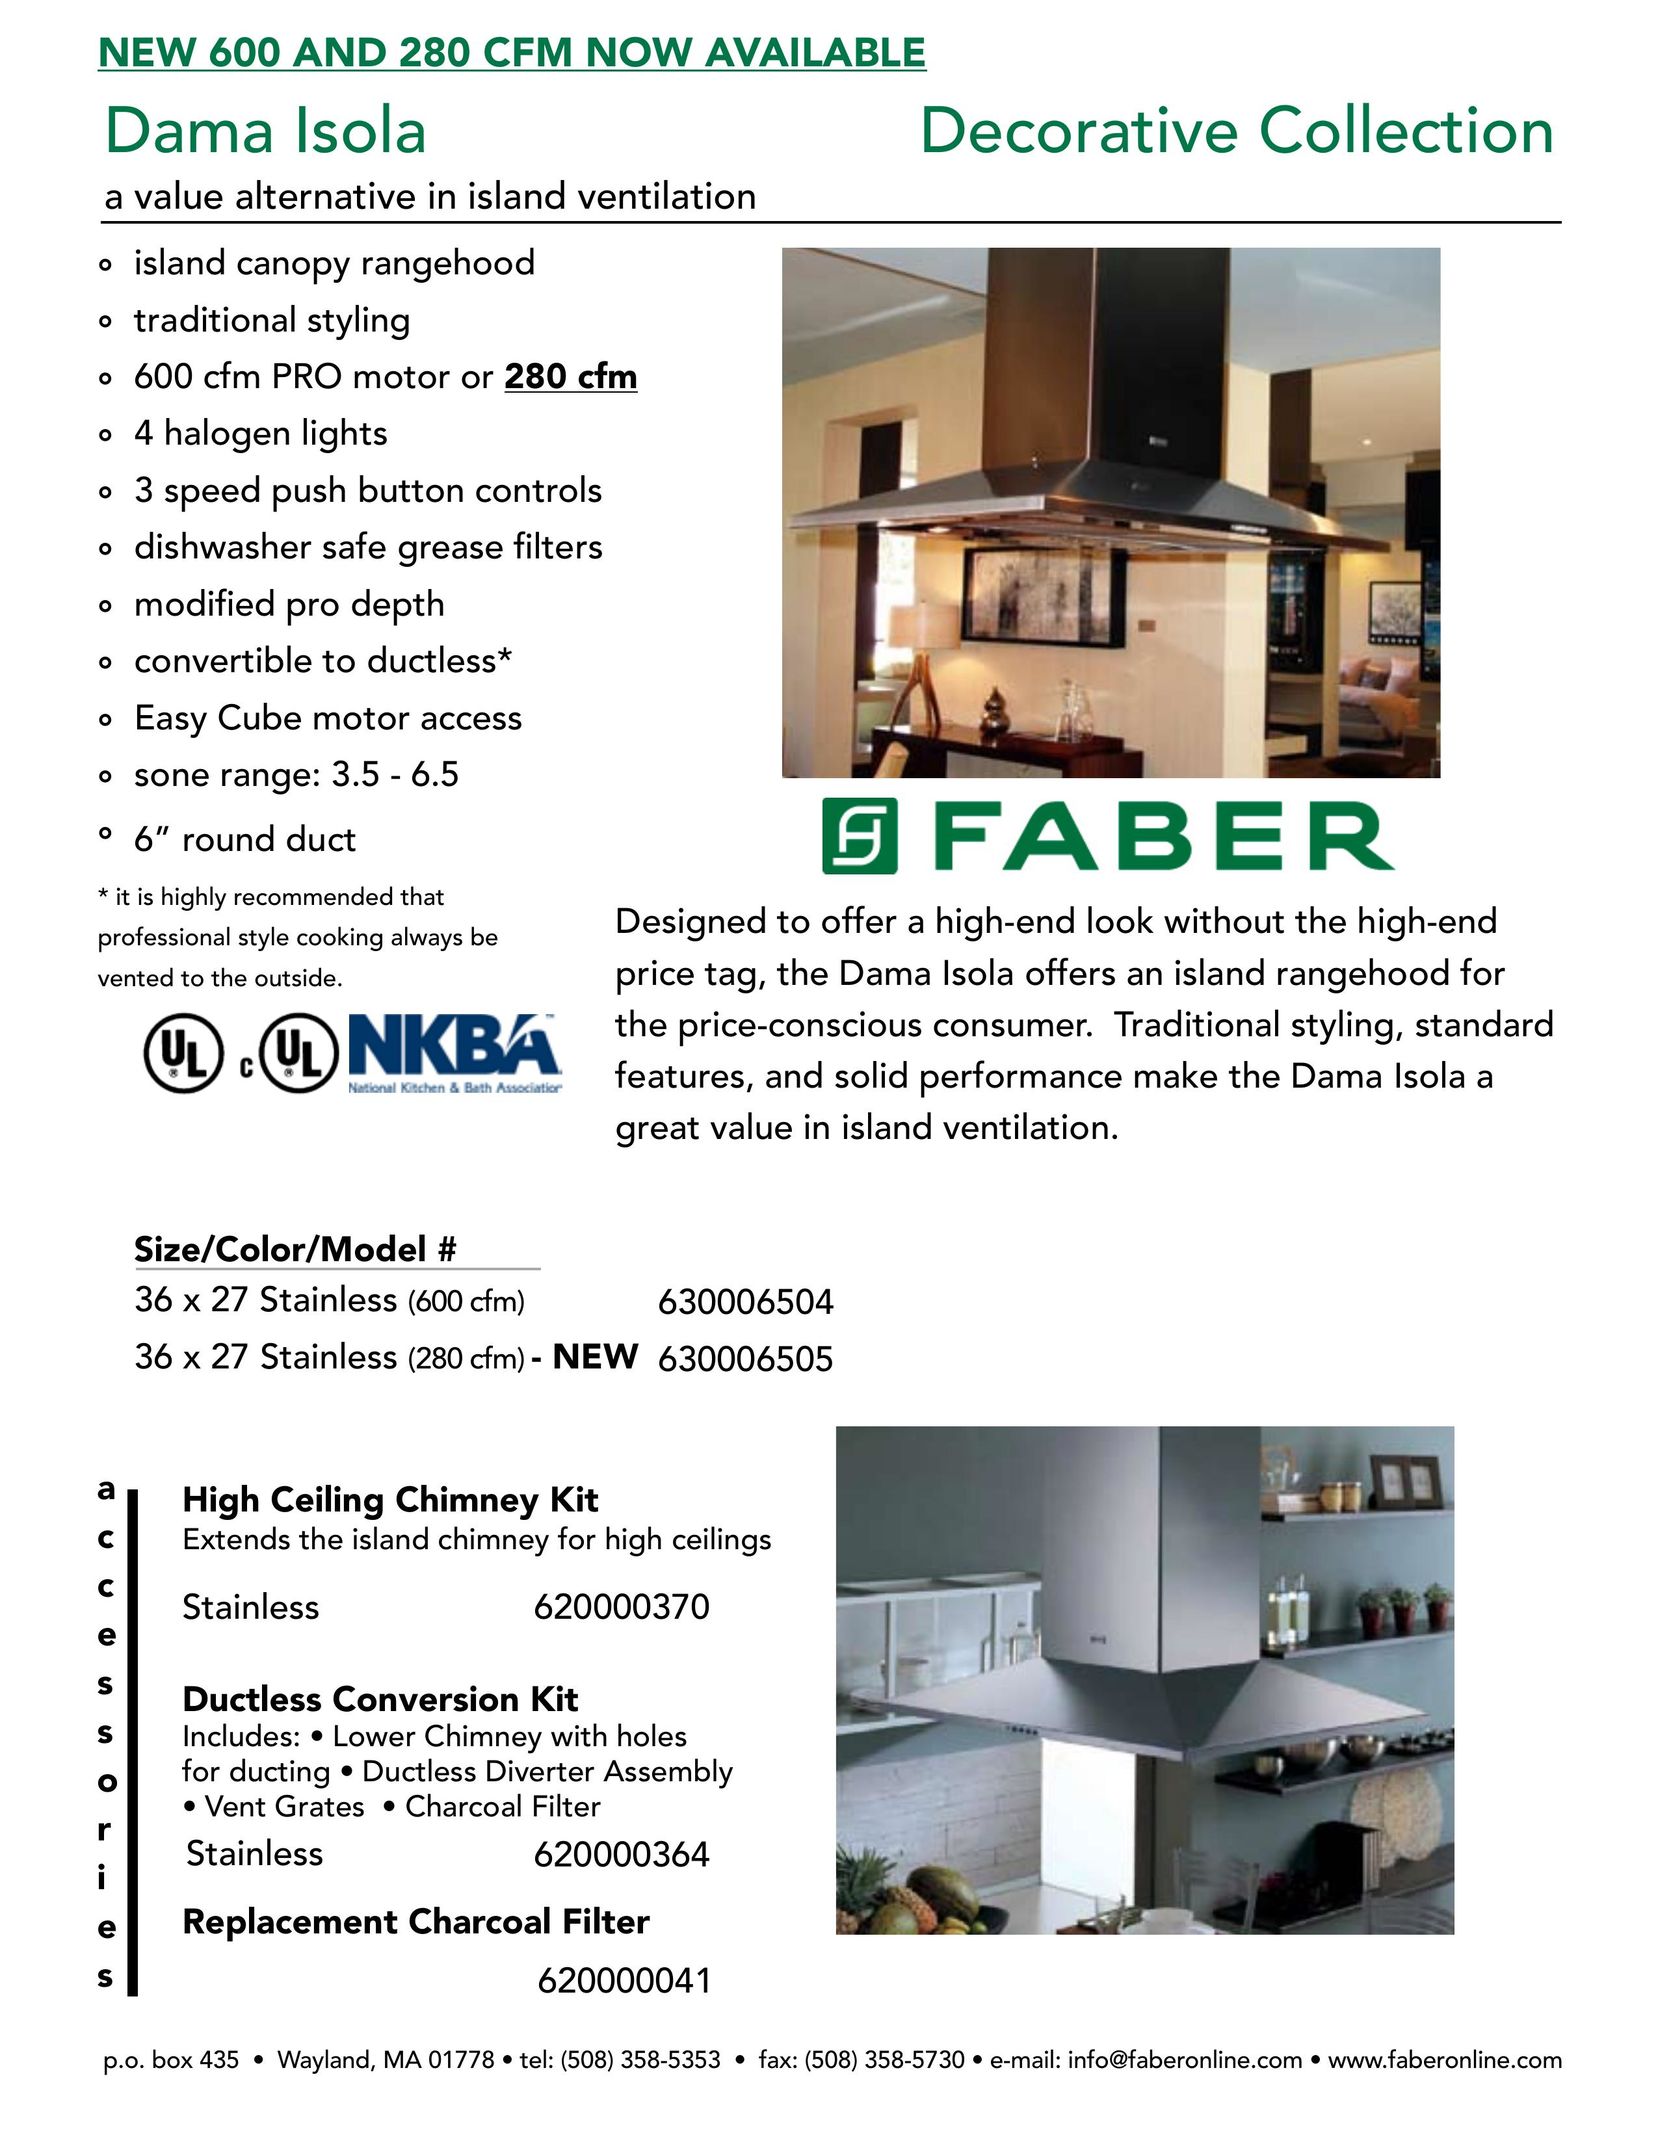 Faber 620000041 Range User Manual